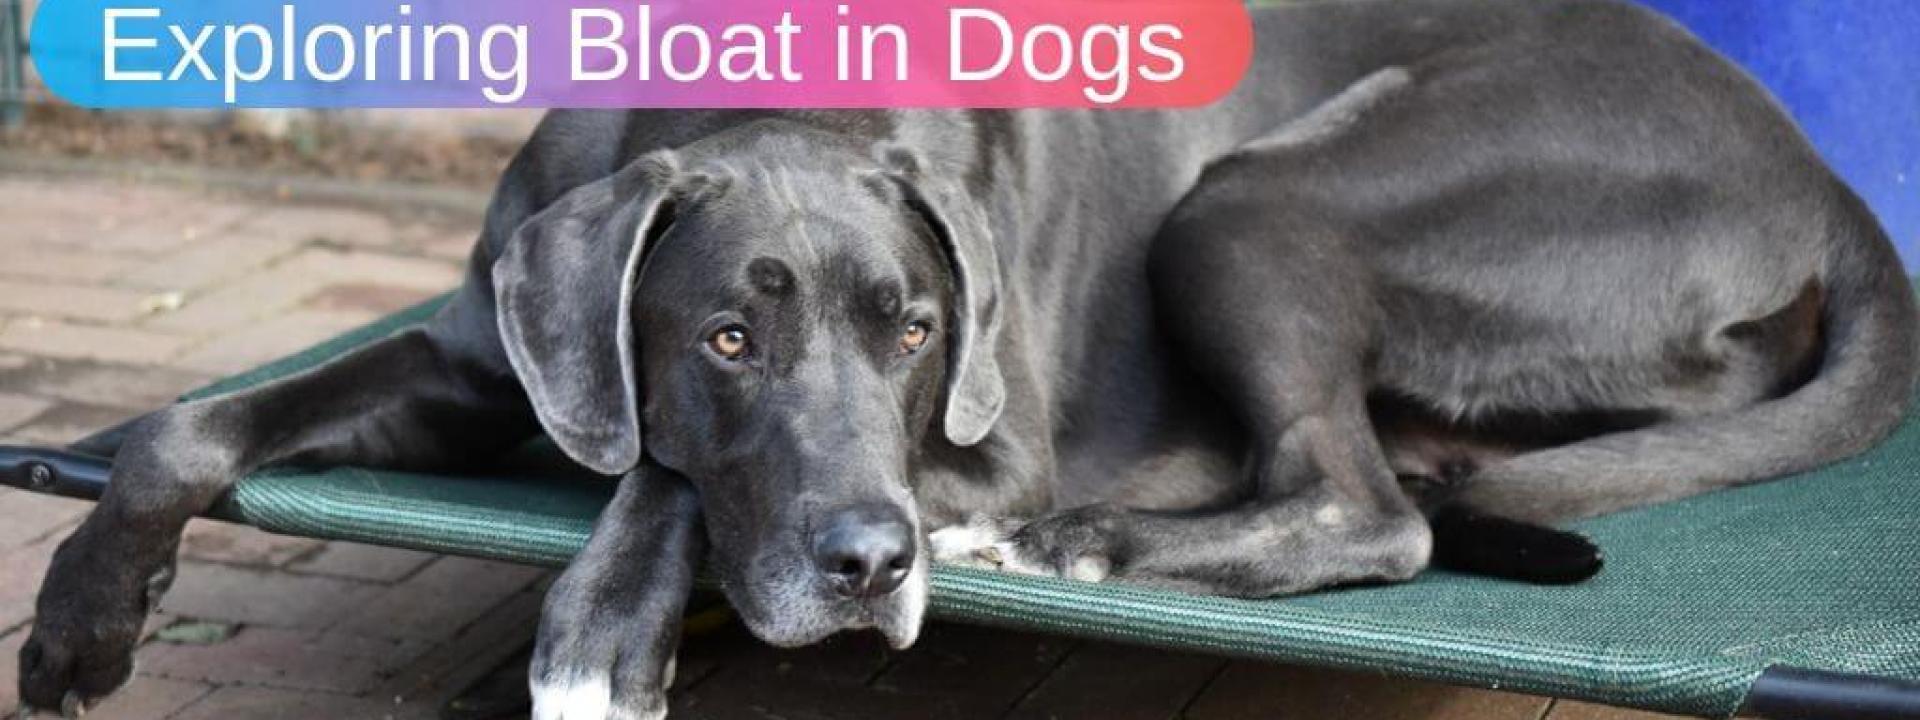 bloat-in-dogs-blog-header.jpg